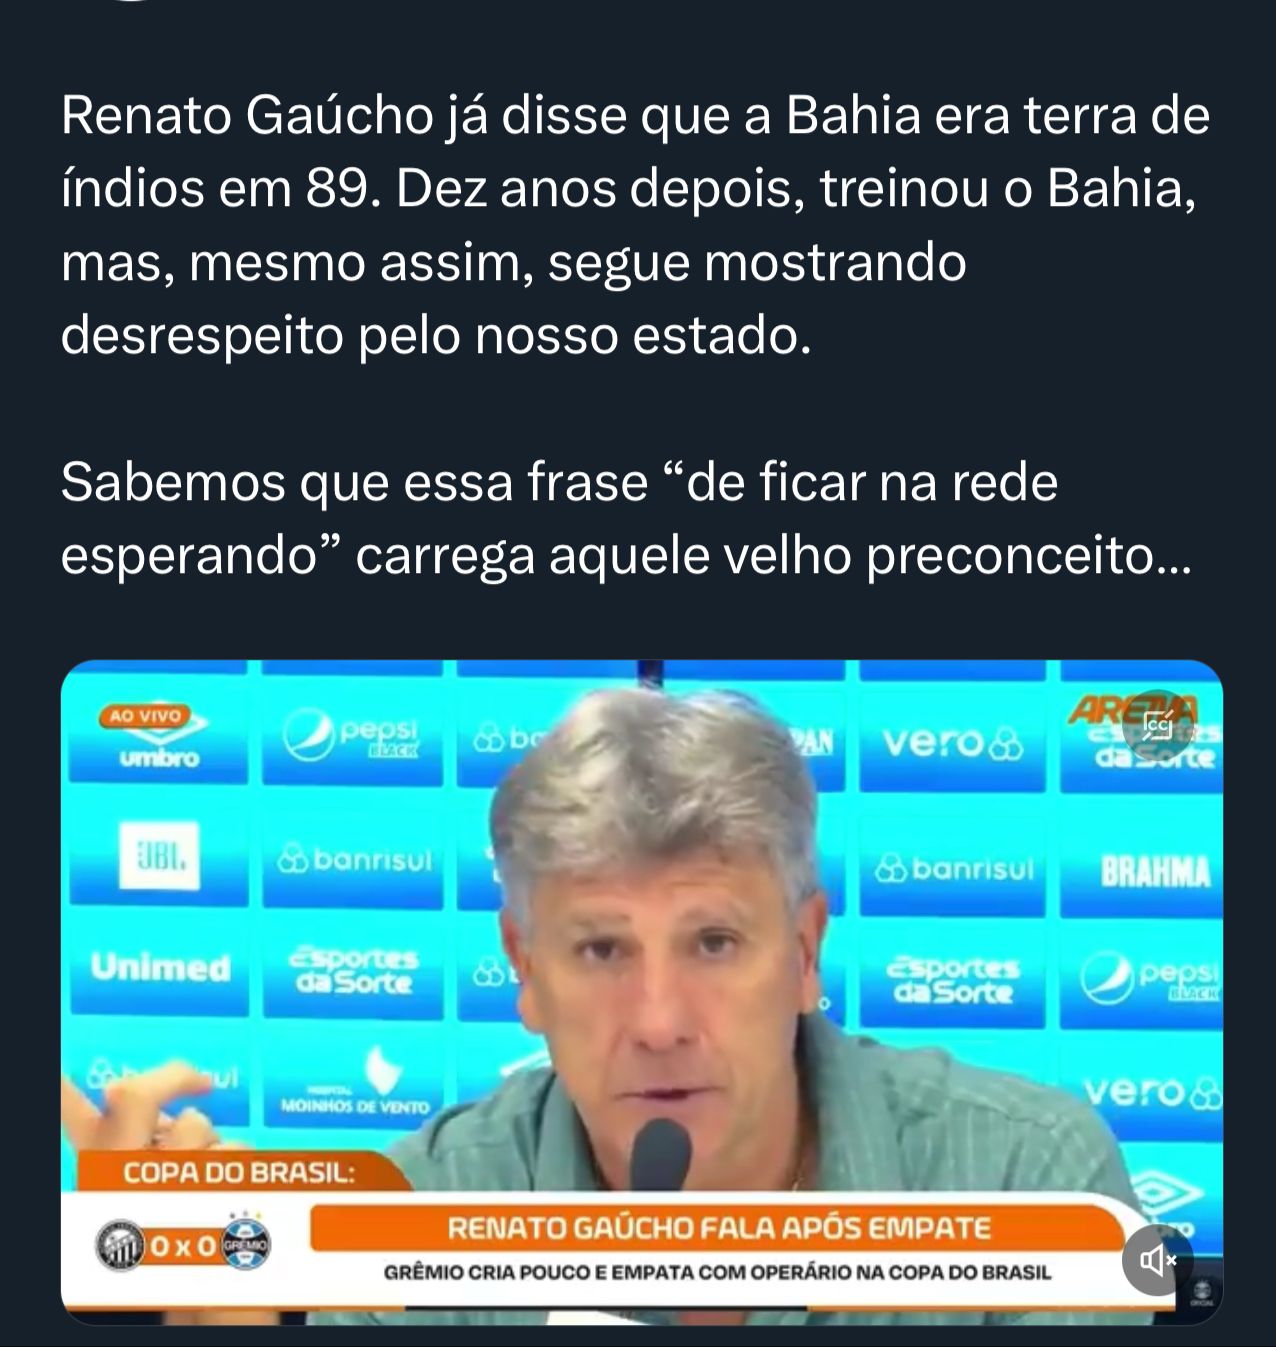 Renato gaúcho xenofobia